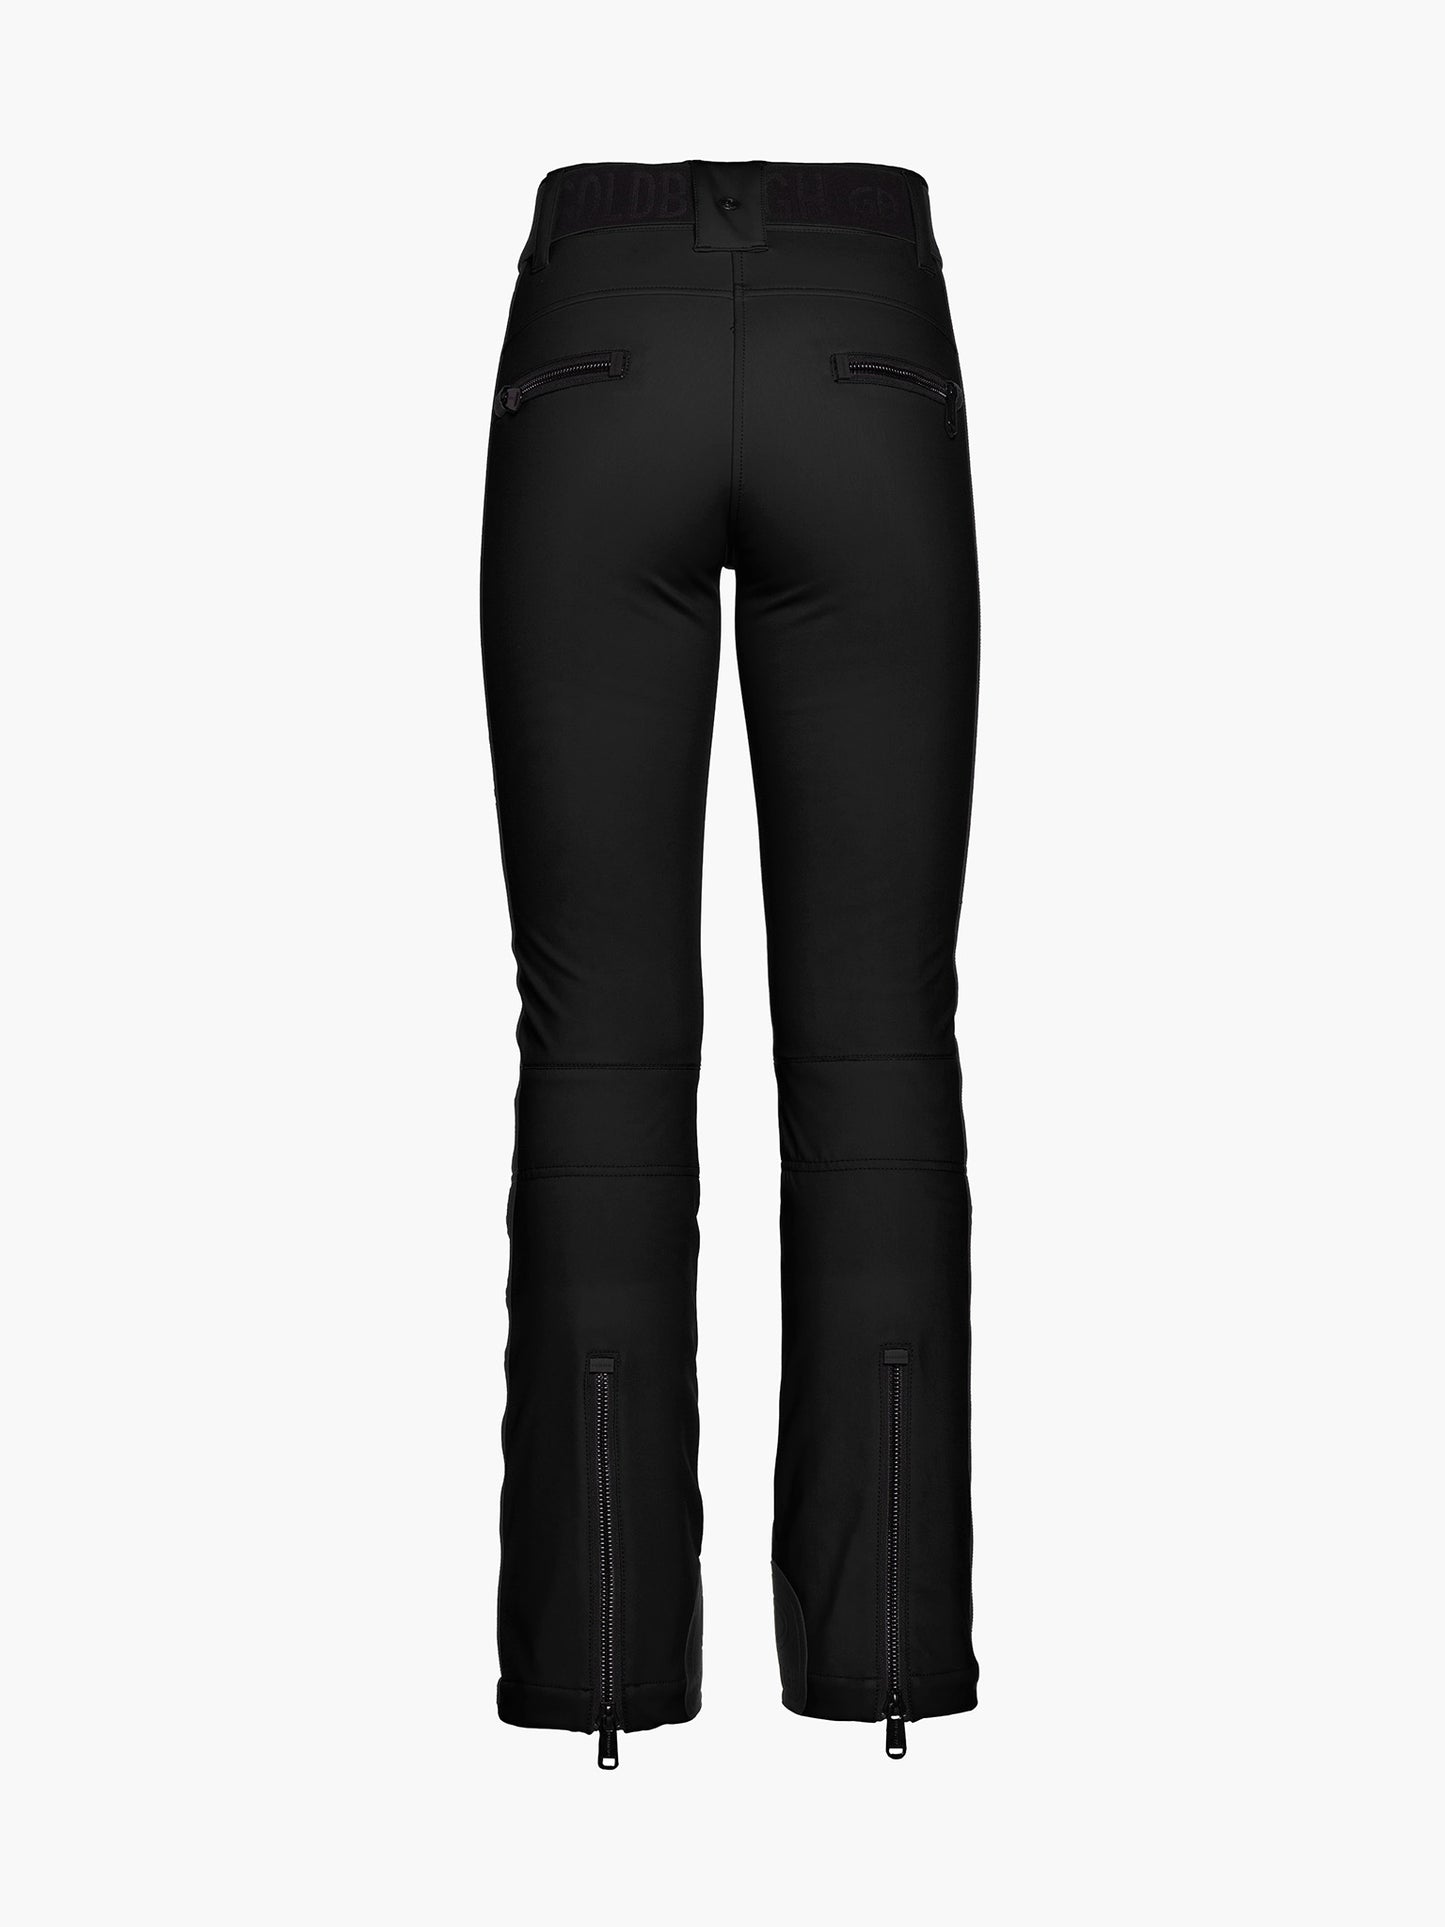 Women's Bellissimo 2 Slim-Fit Softshell Ski Pants